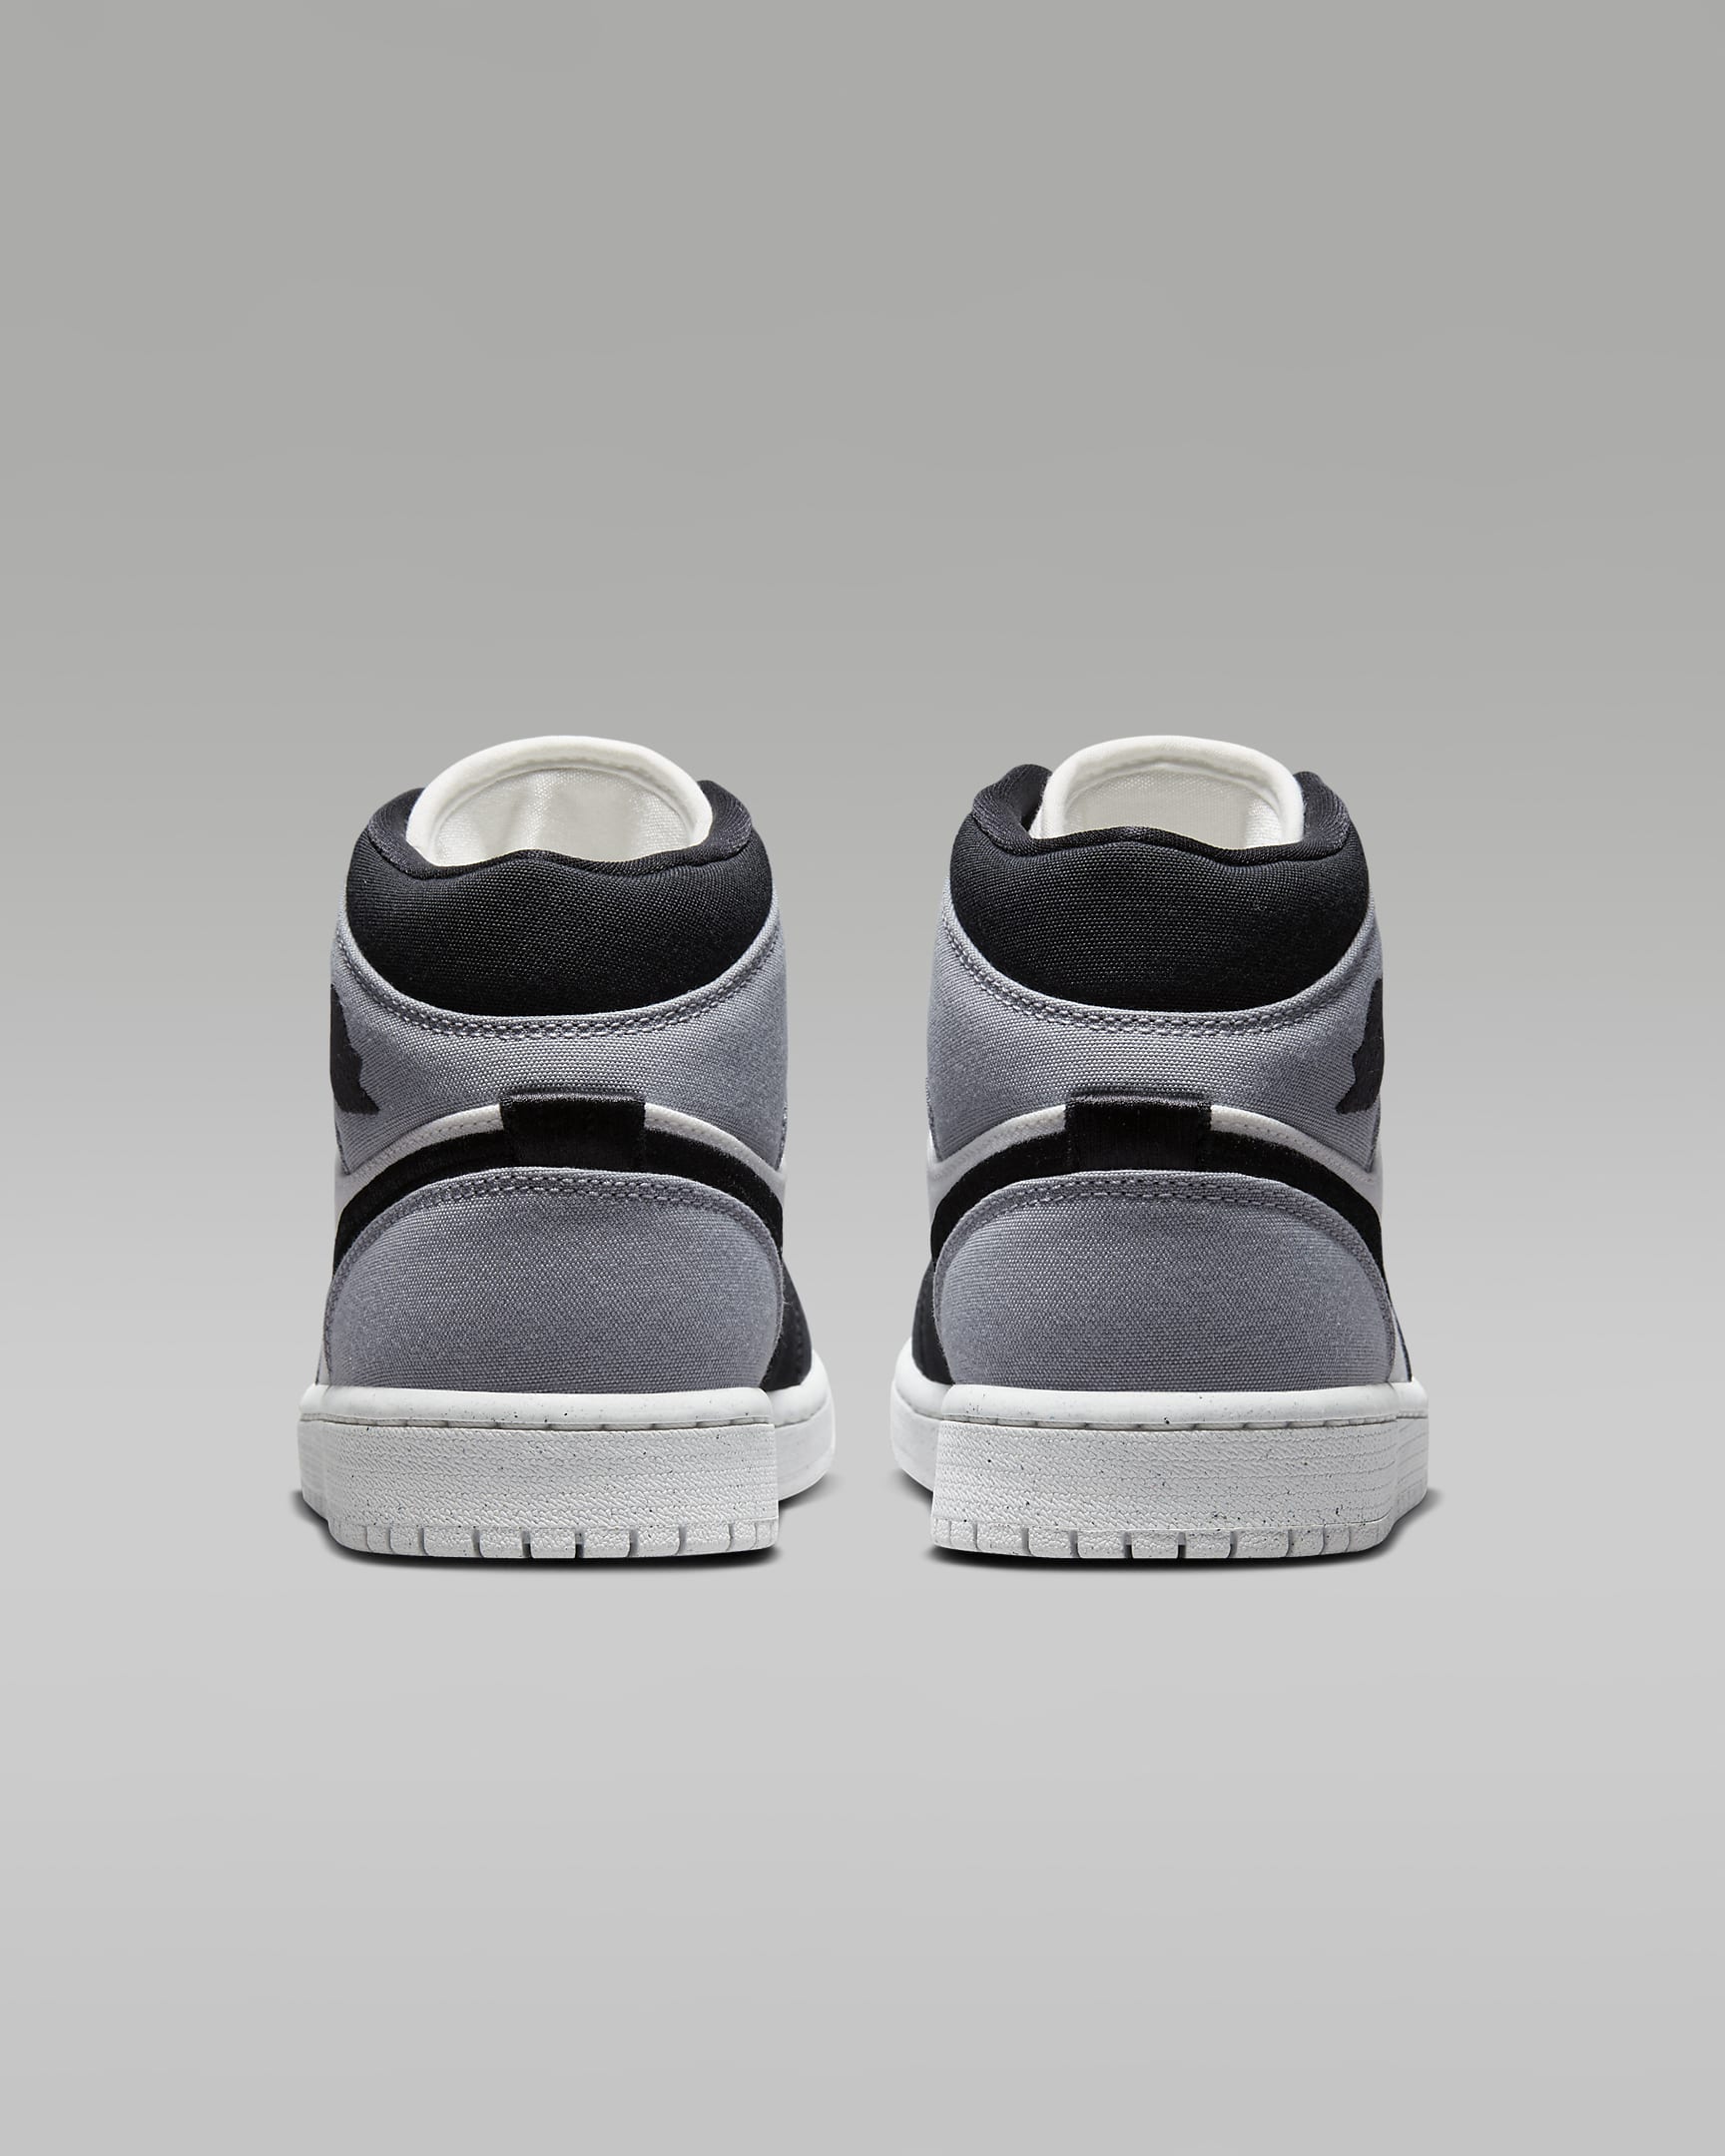 Air Jordan 1 Mid SE Women's Shoes - Sail/Light Steel Grey/Black